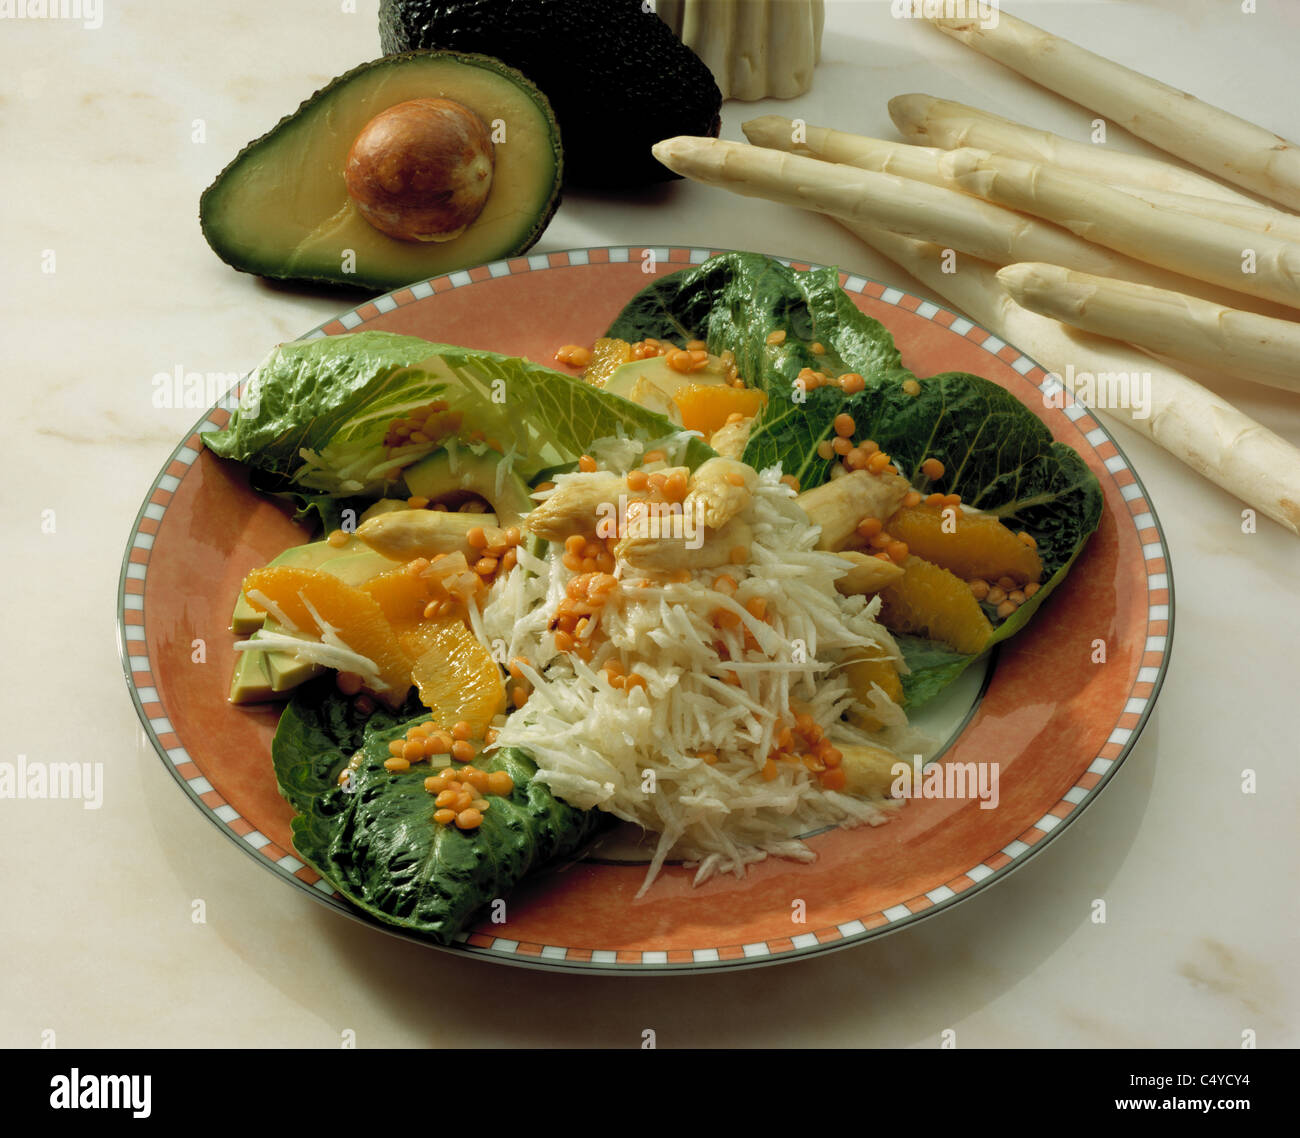 Asparagus salad with avocado Stock Photo